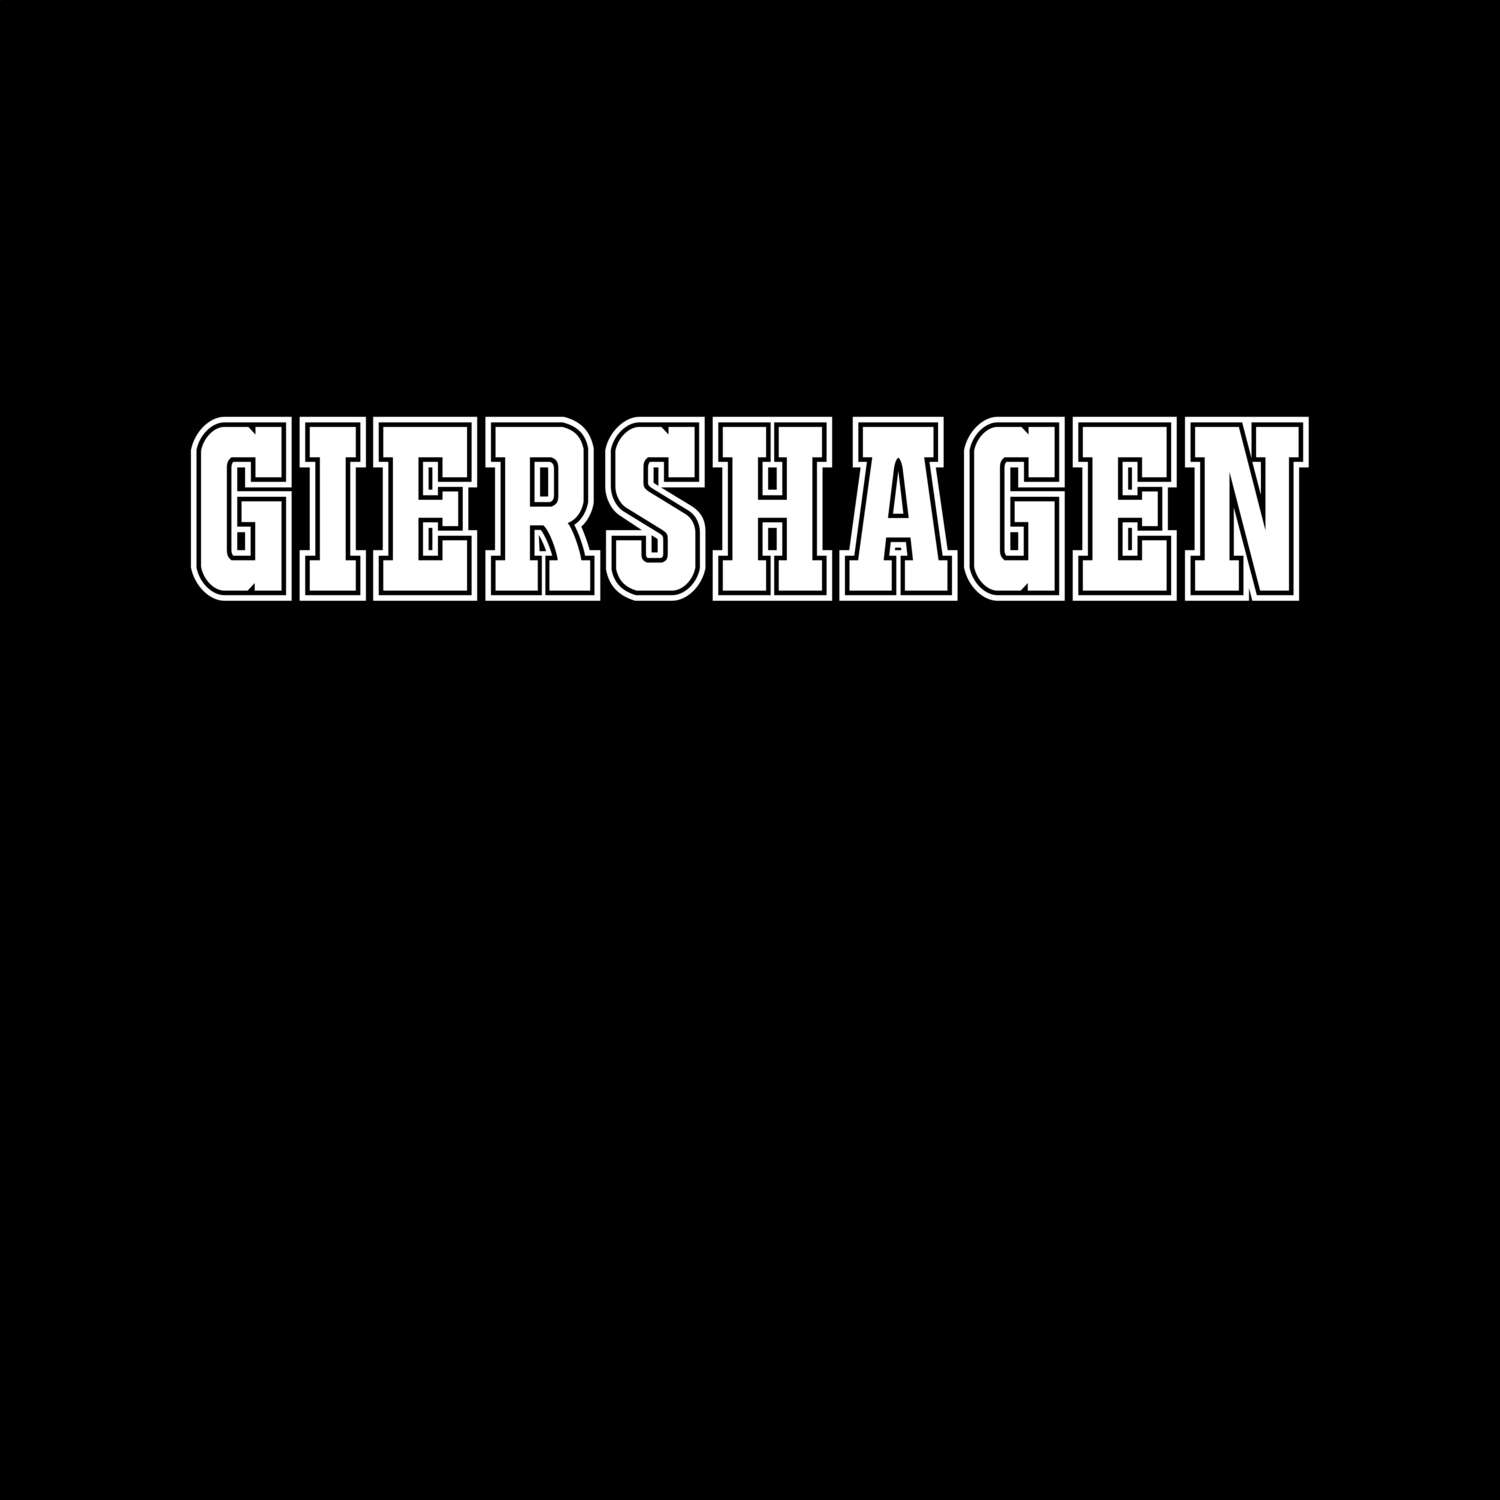 Giershagen T-Shirt »Classic«